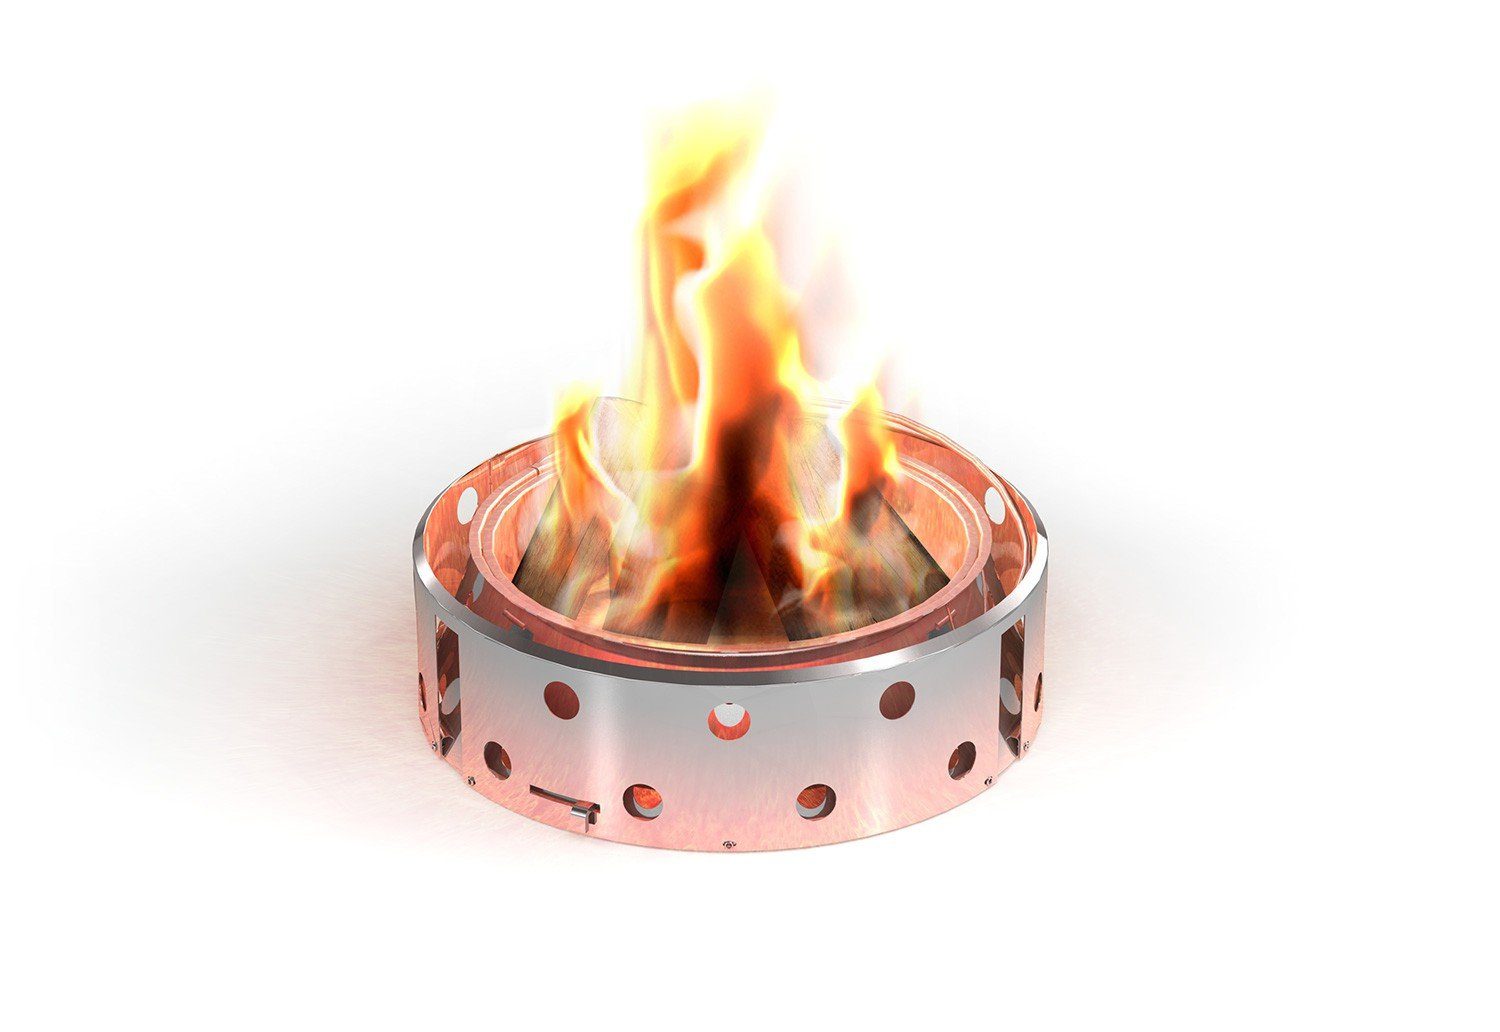 Feuerschale nutzbar Ofen, - Grill, Petromax Feuerschale oder Atago Herd als